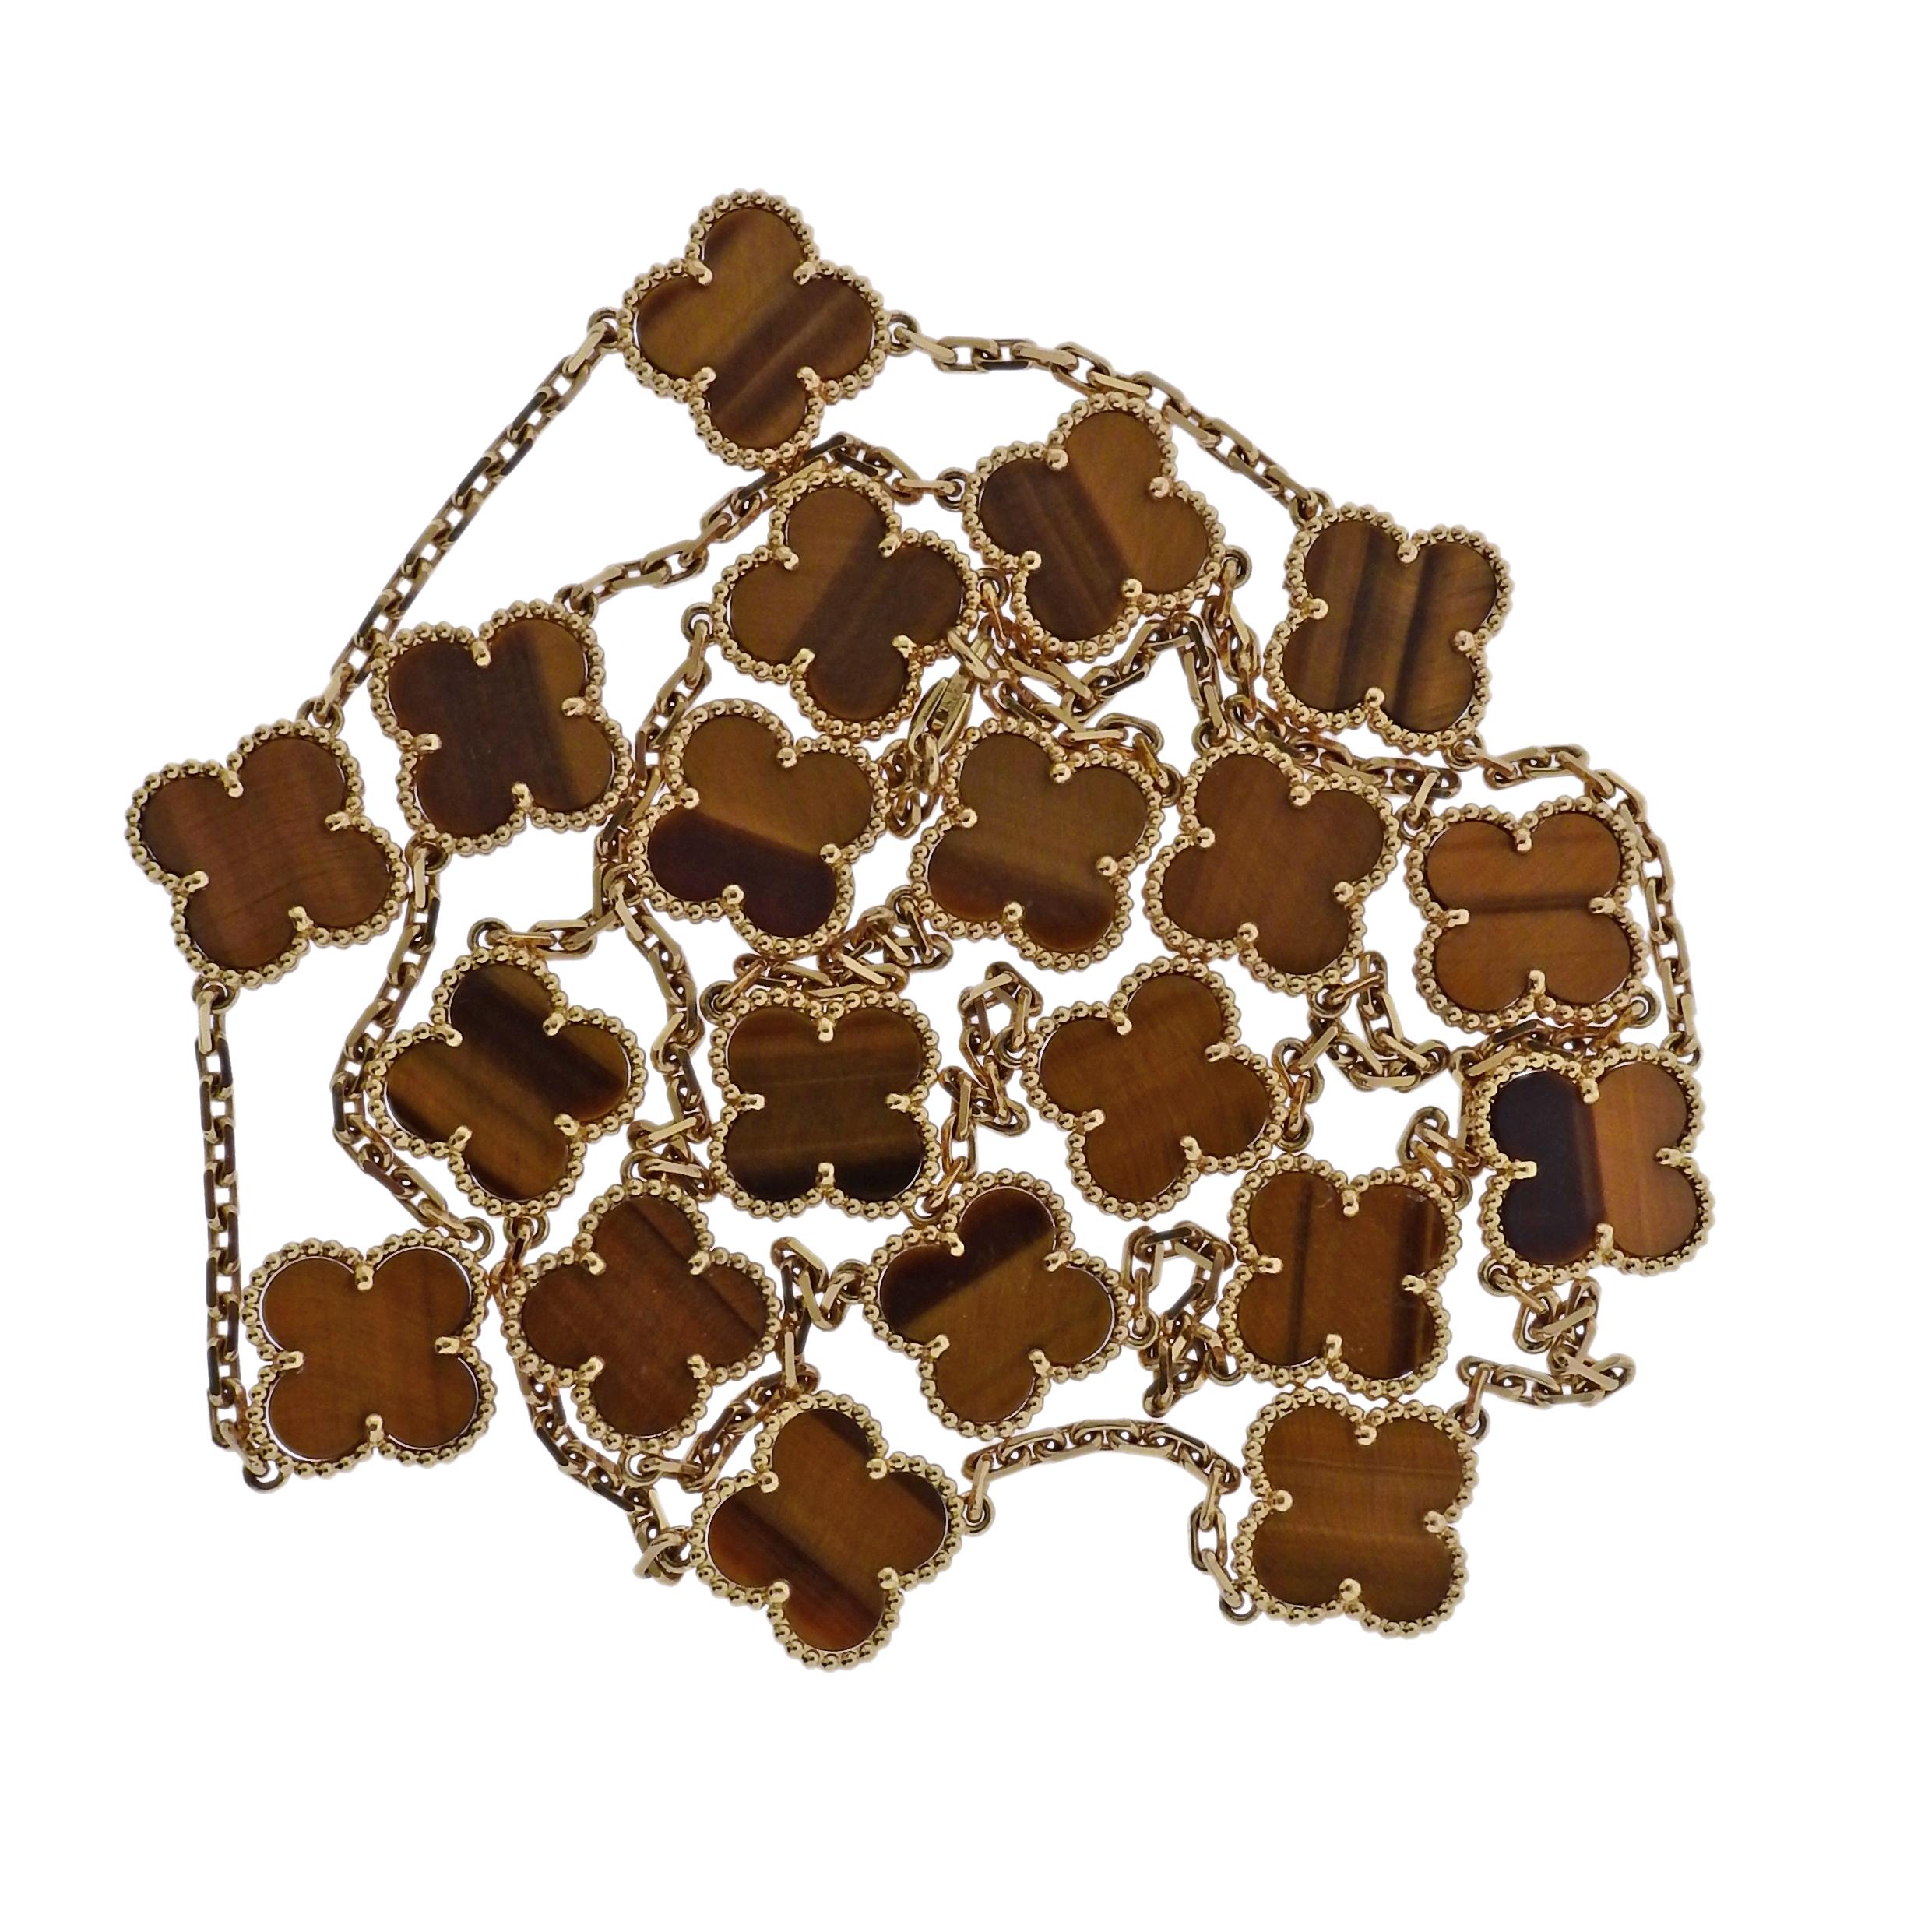 20 motif alhambra necklace